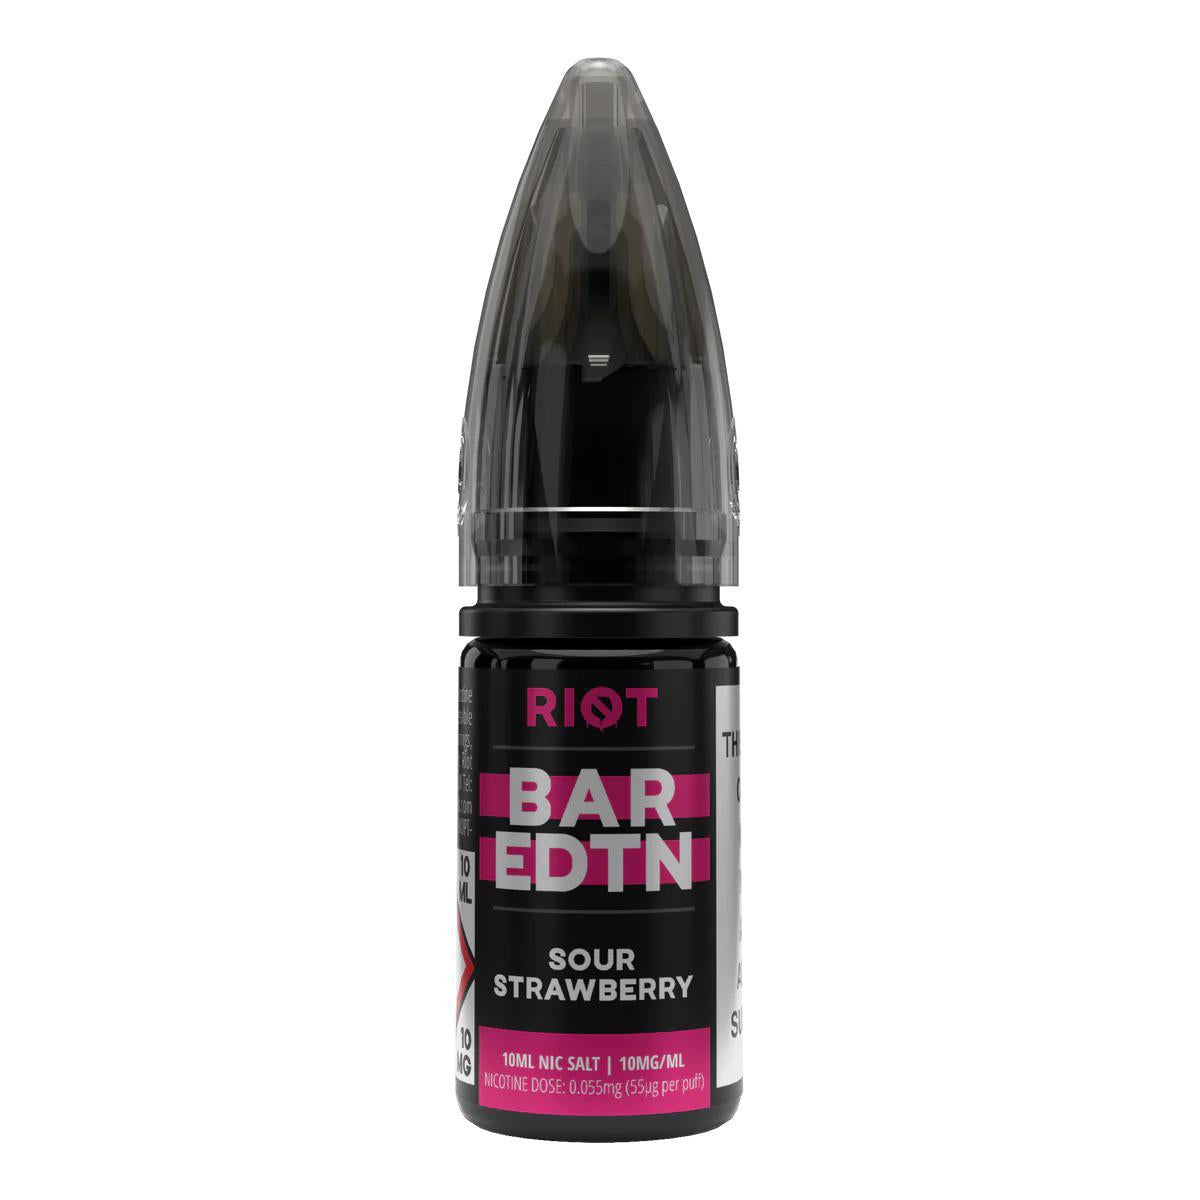 RIOT Bar EDTN - Sour Strawberry 10ml E-Liquid - The British Vape Company